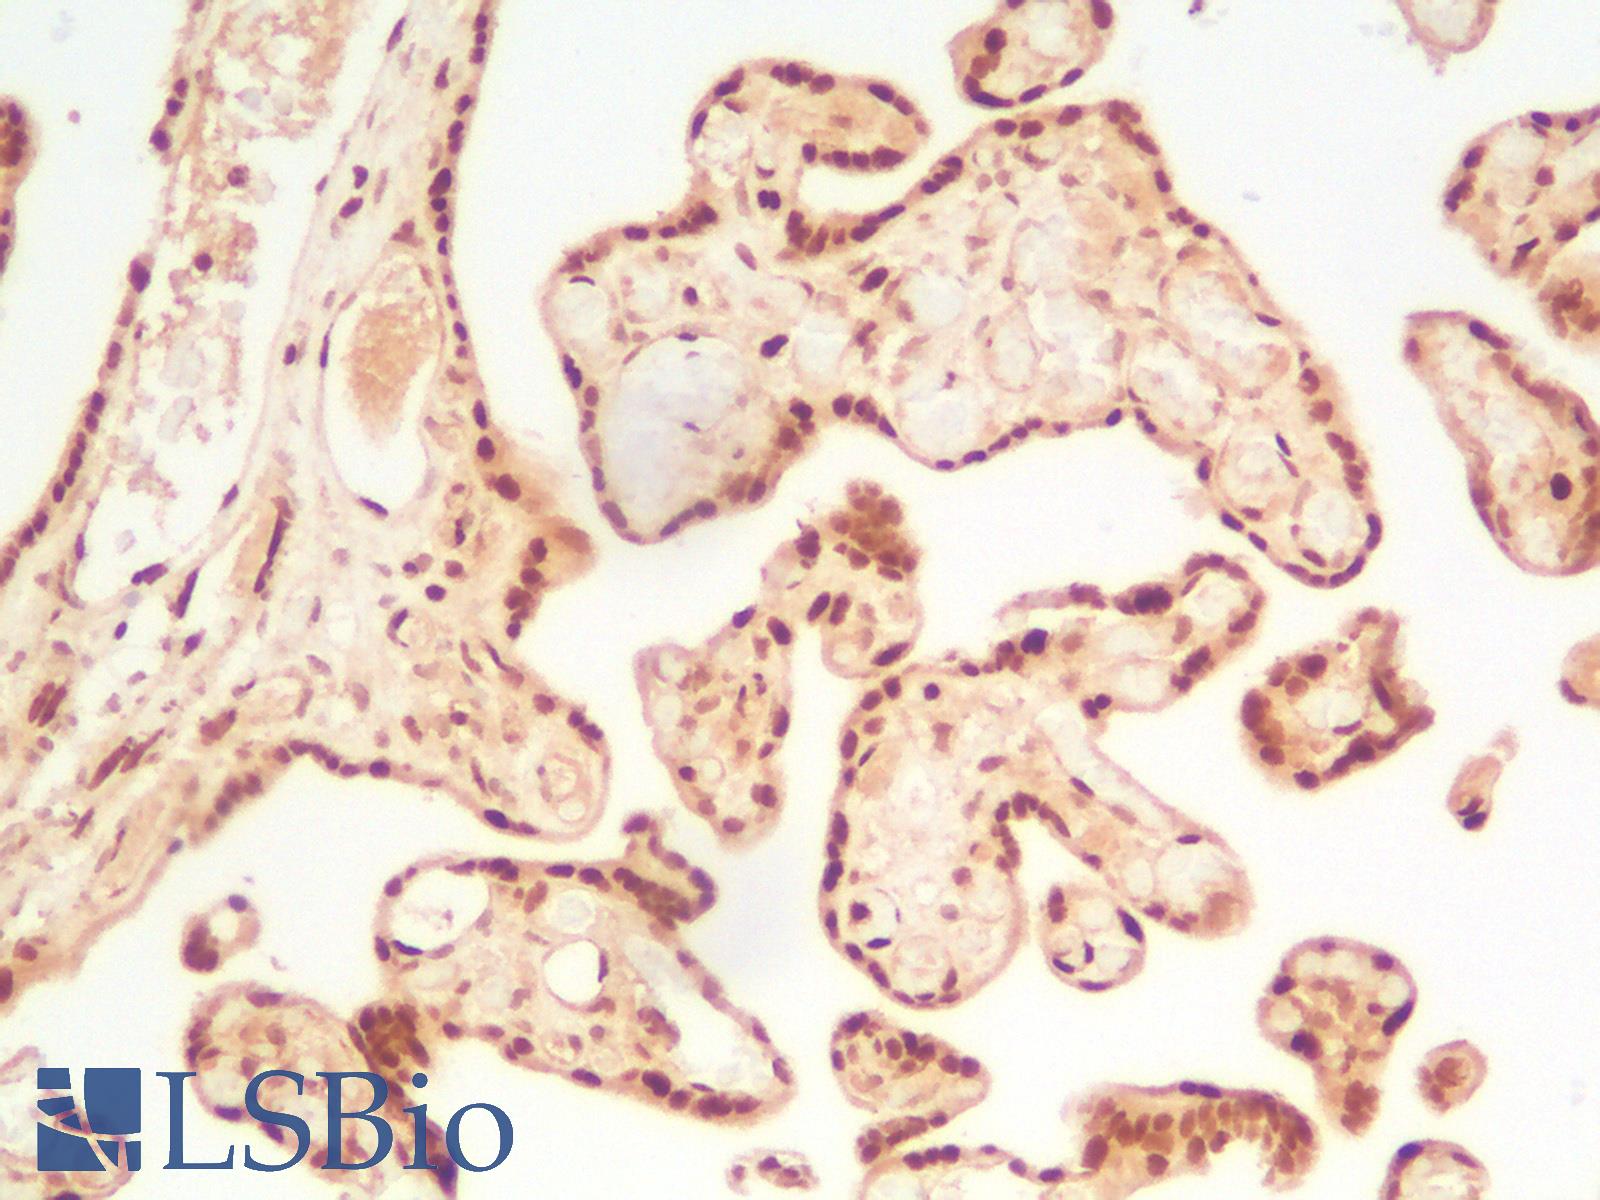 TFE3 Antibody - Human Placenta: Formalin-Fixed, Paraffin-Embedded (FFPE)